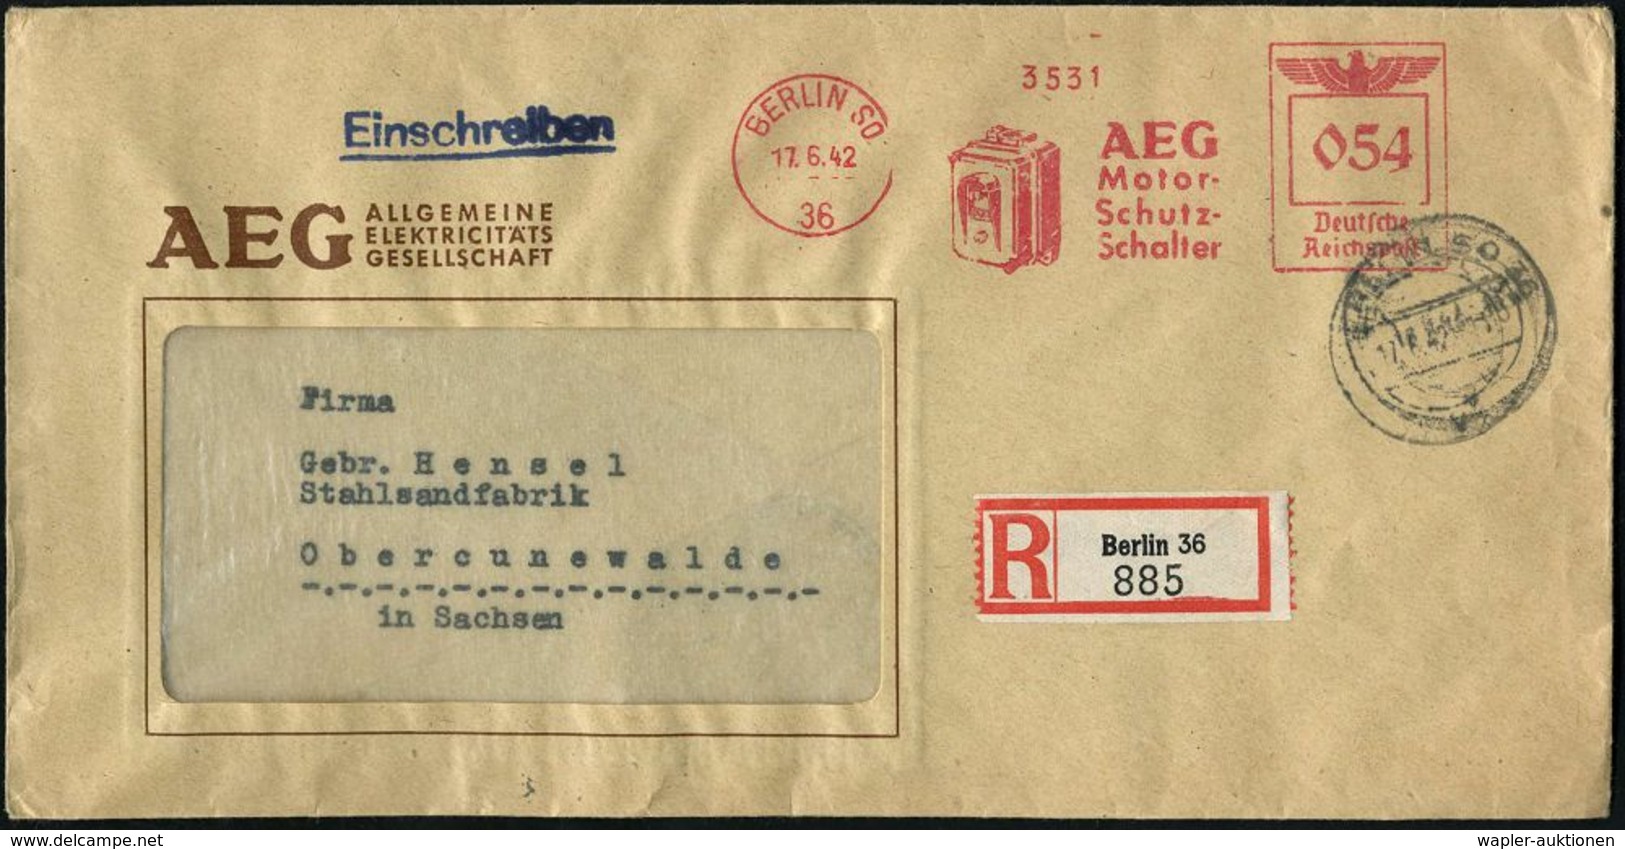 BERLIN SO/ 36/ AEG/ Motor-/ Schutz-/ Schalter 1942 (17.6.) AFS 054 Pf. = Schutzschalter + RZ: Berlin 36, AEG-Firmen-R-Bf - Elektriciteit